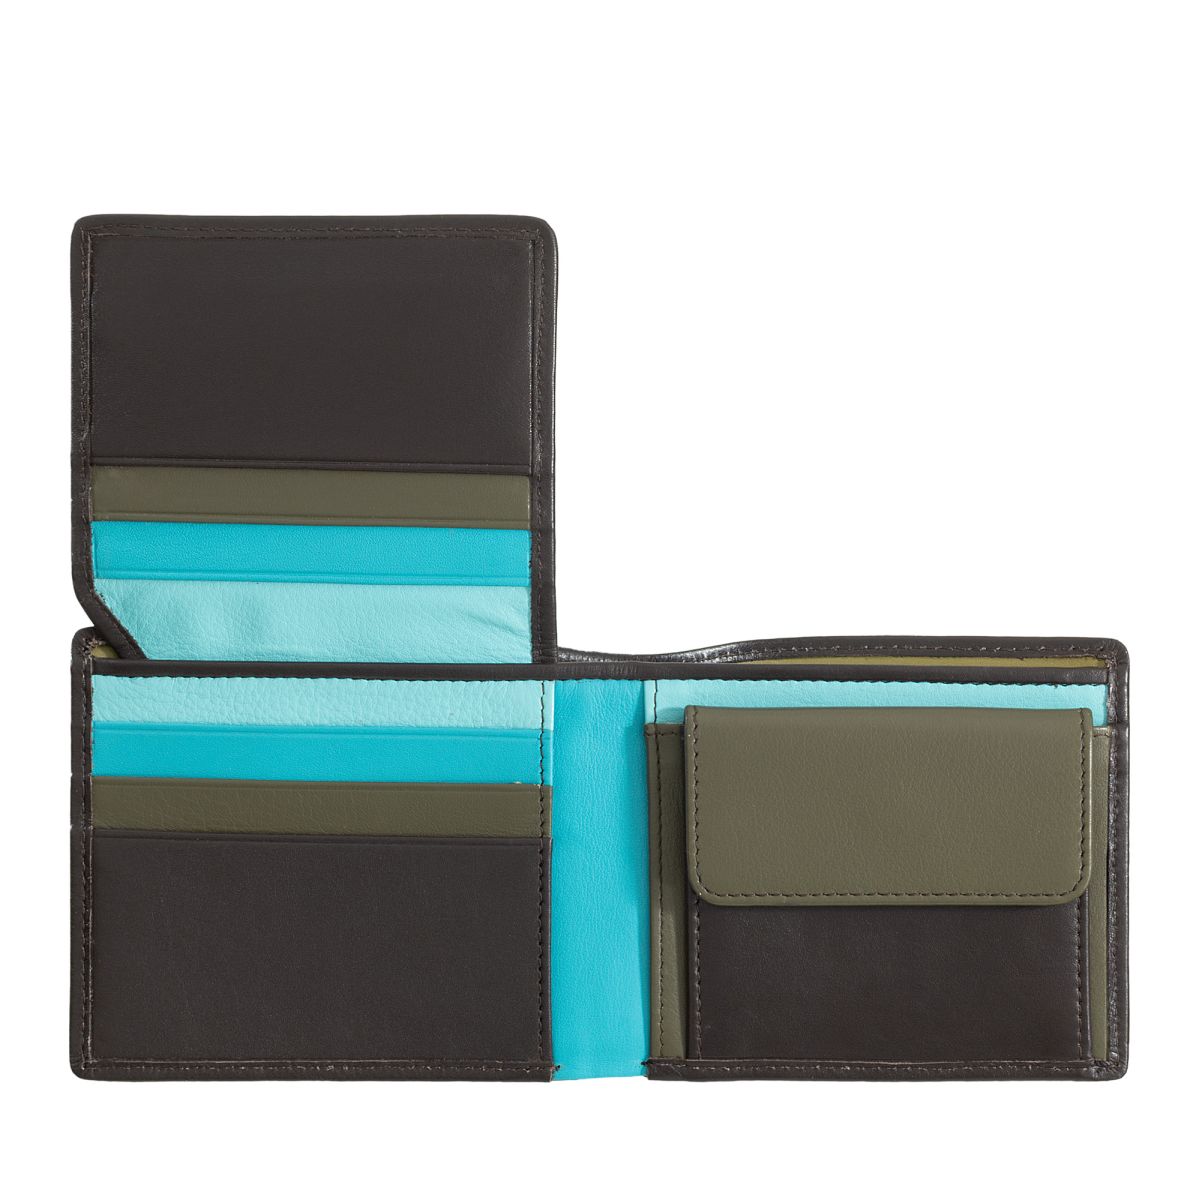 DuDu Mans genuine leather wallet - Brown